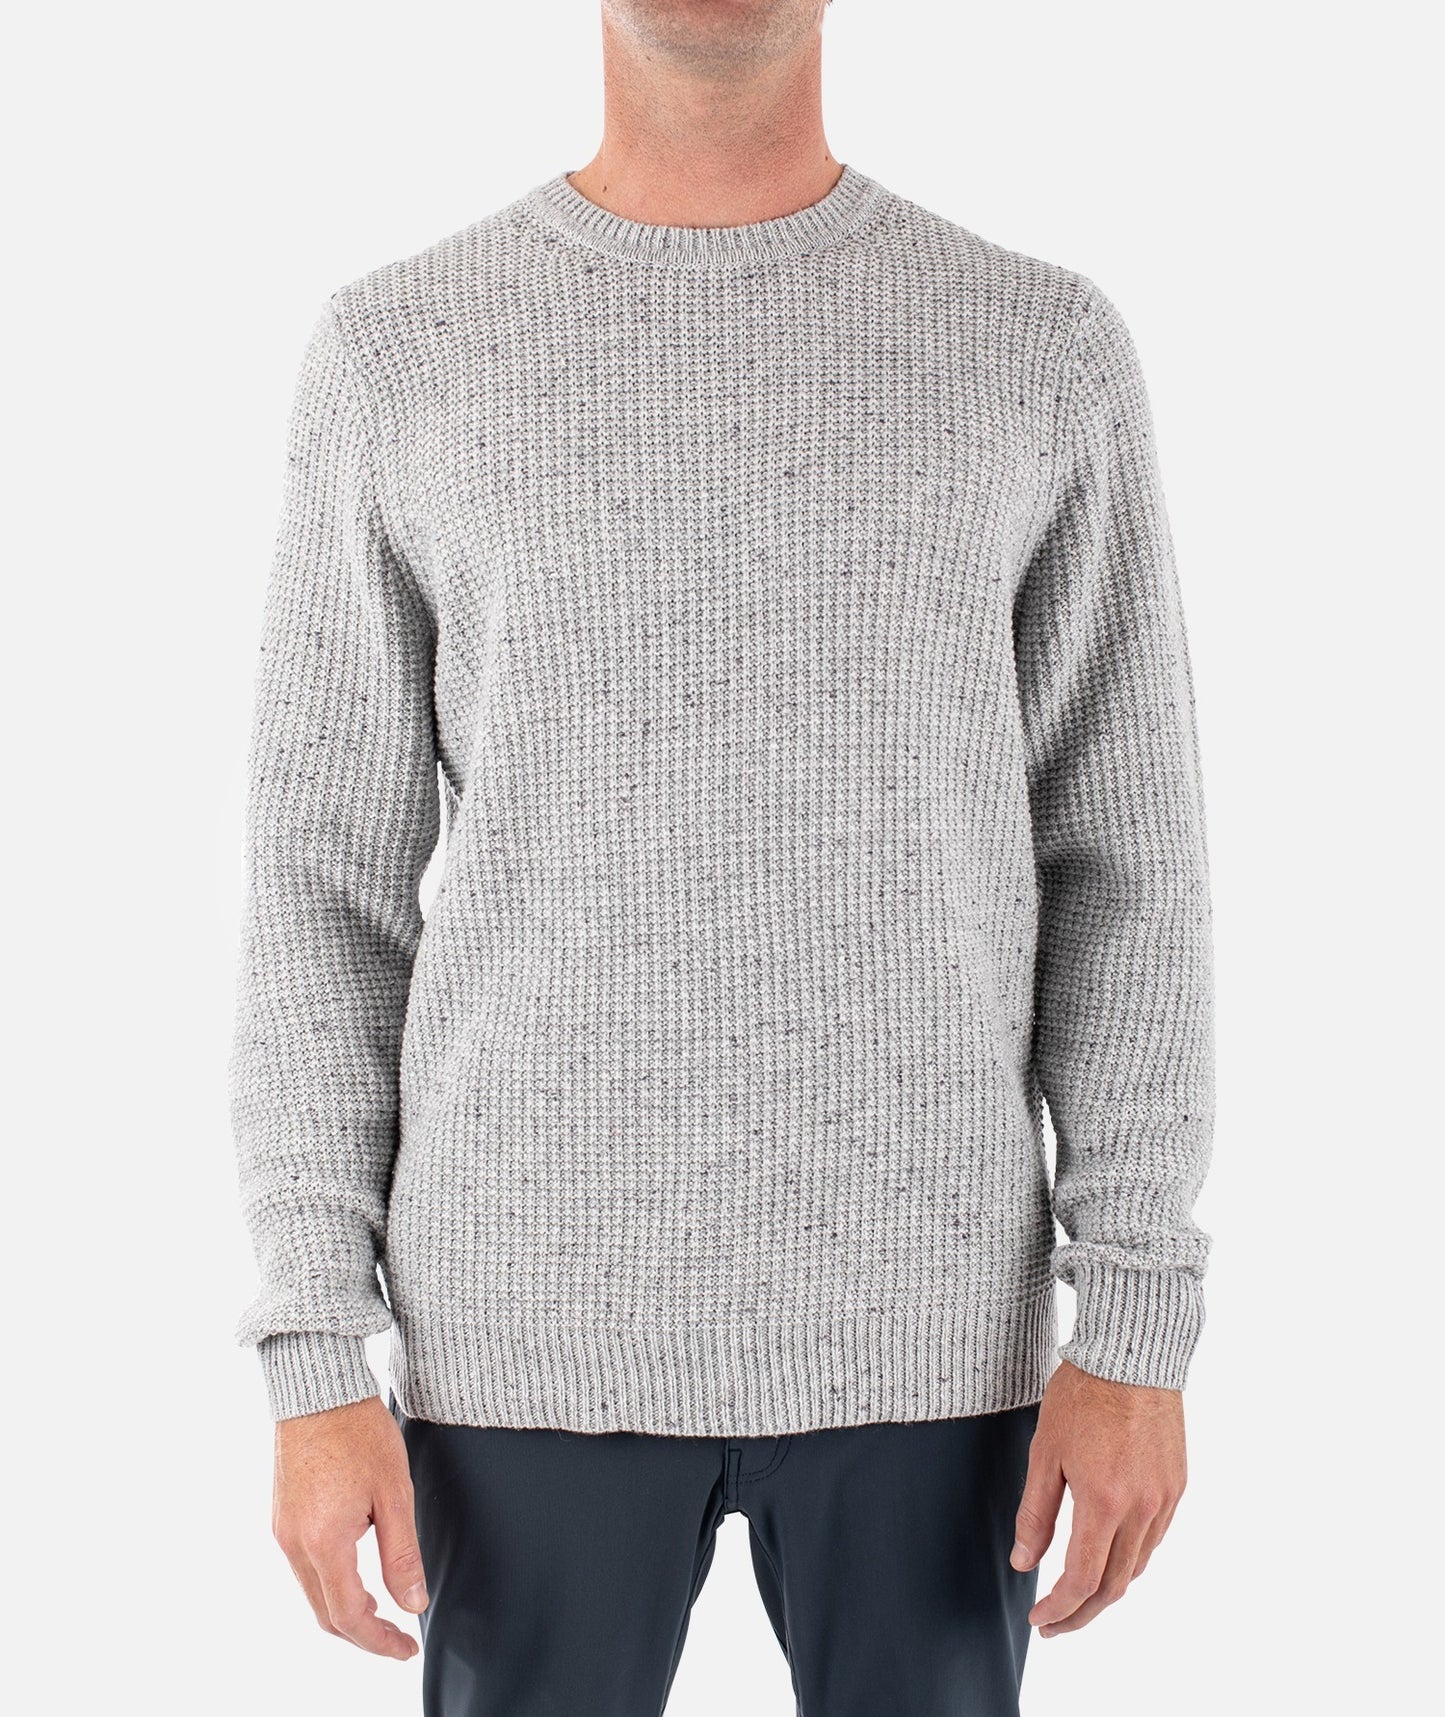 Paragon Oystex Sweater - Light Grey